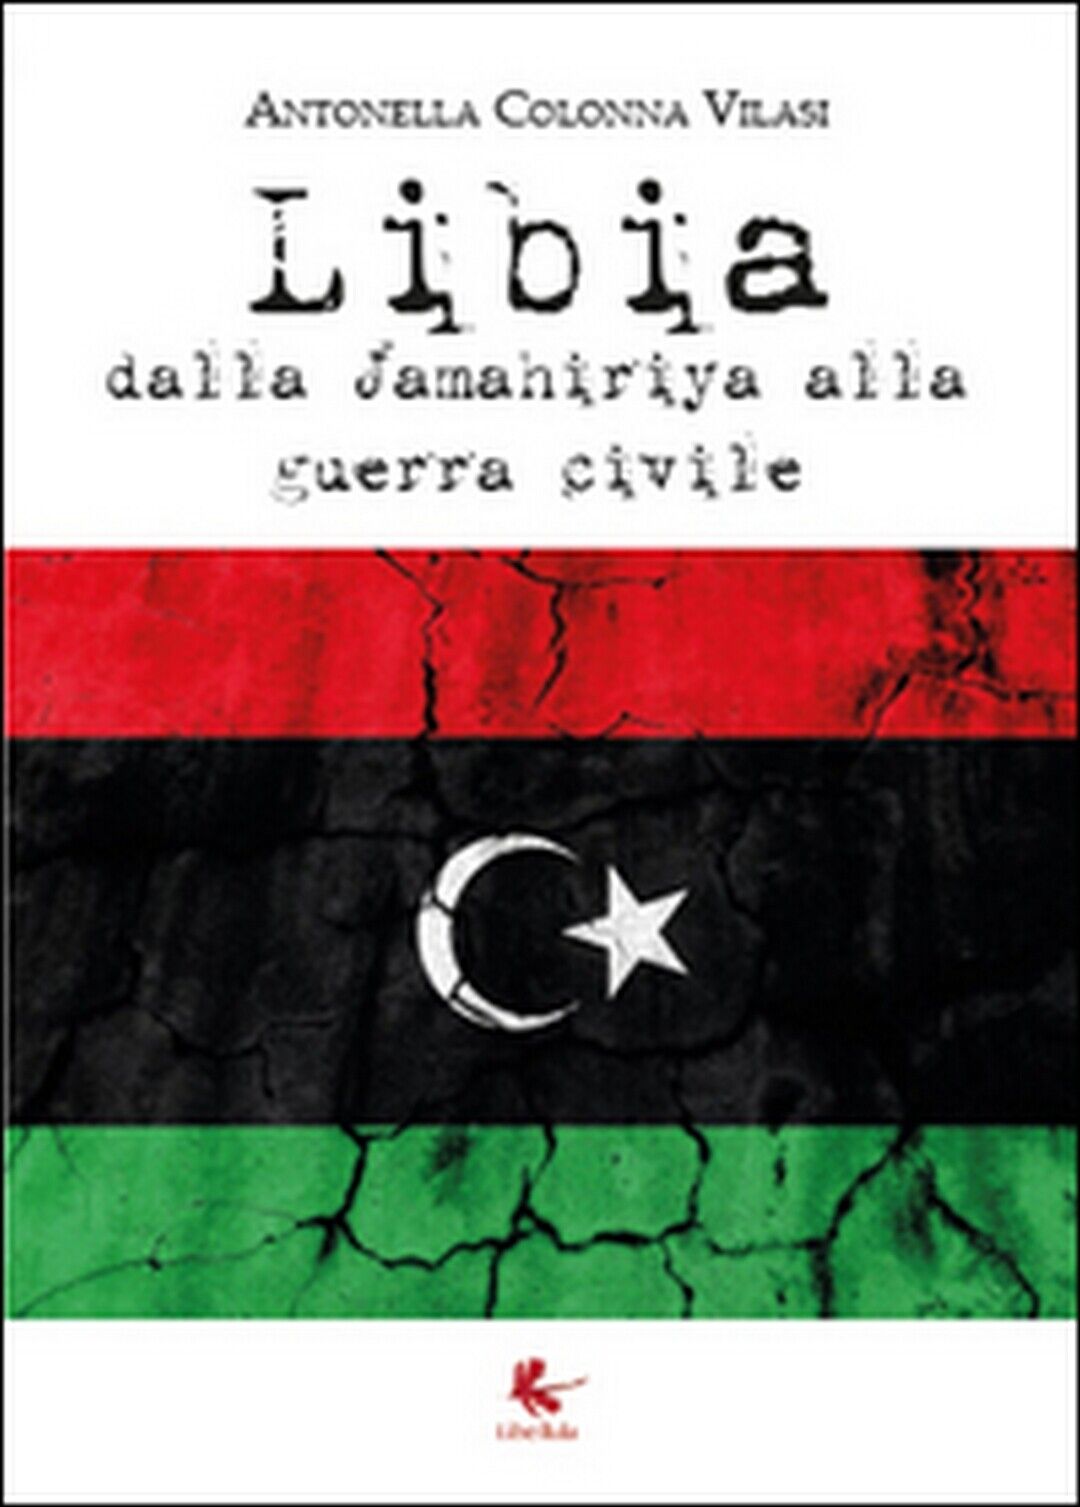 Libia. Dalla Jamahiriya alla guerra civile, Antonella Colonna Vilasi,  2015